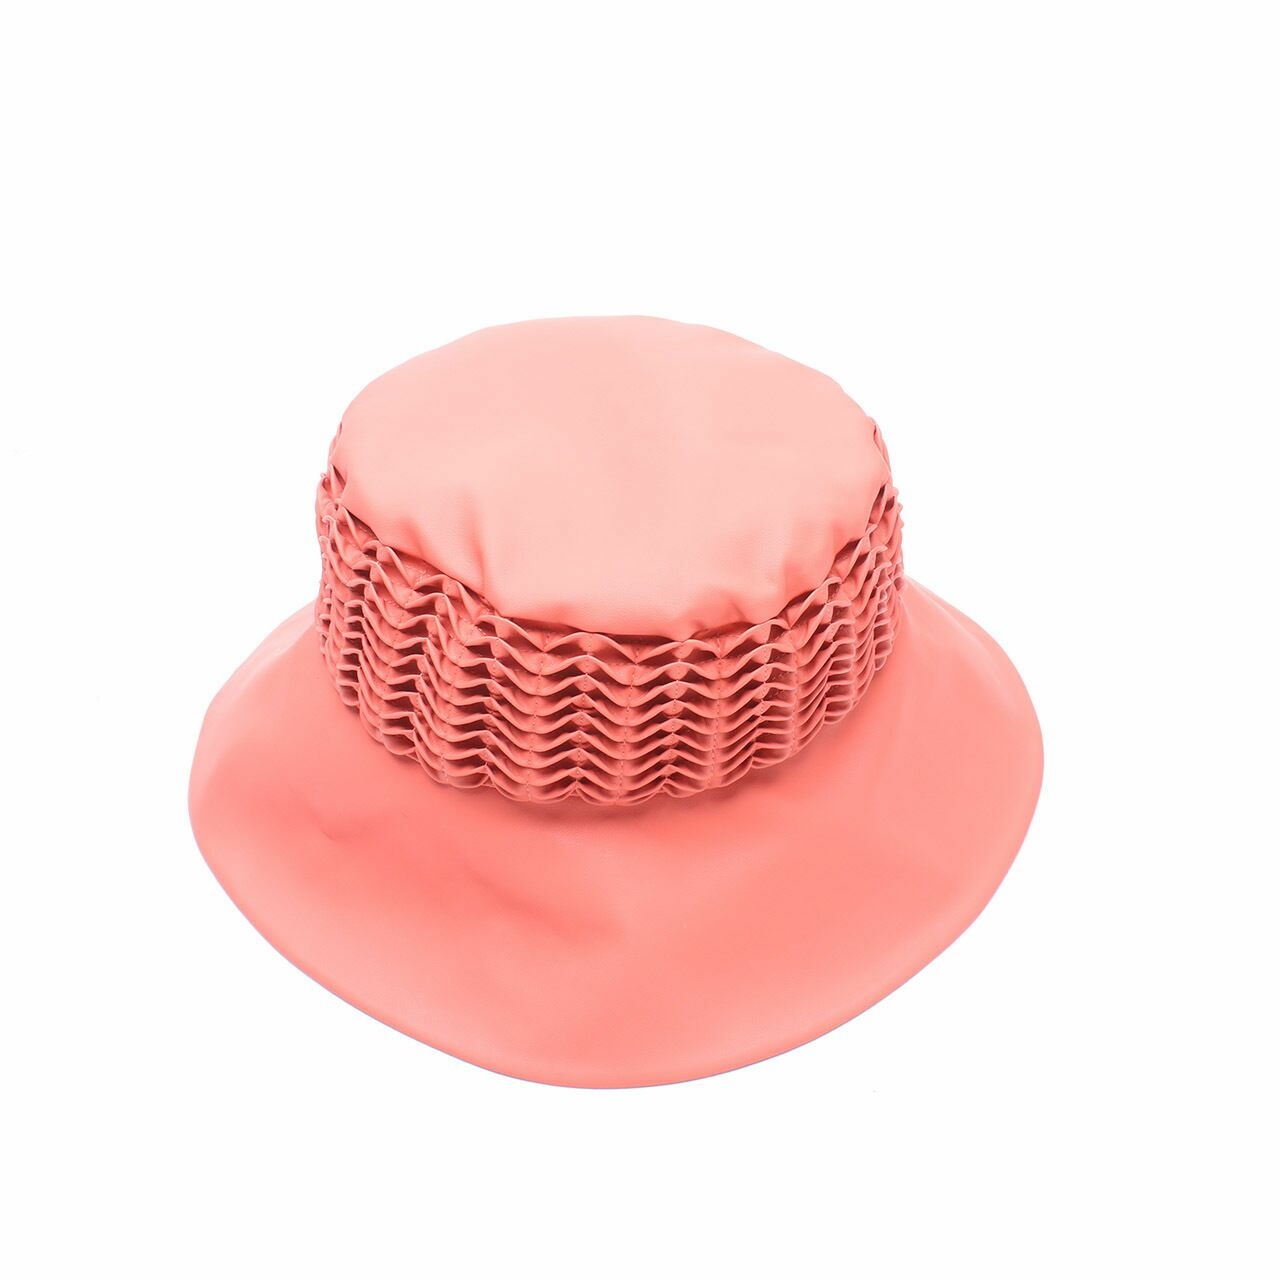 Patrick Owen Pink Coral Hats